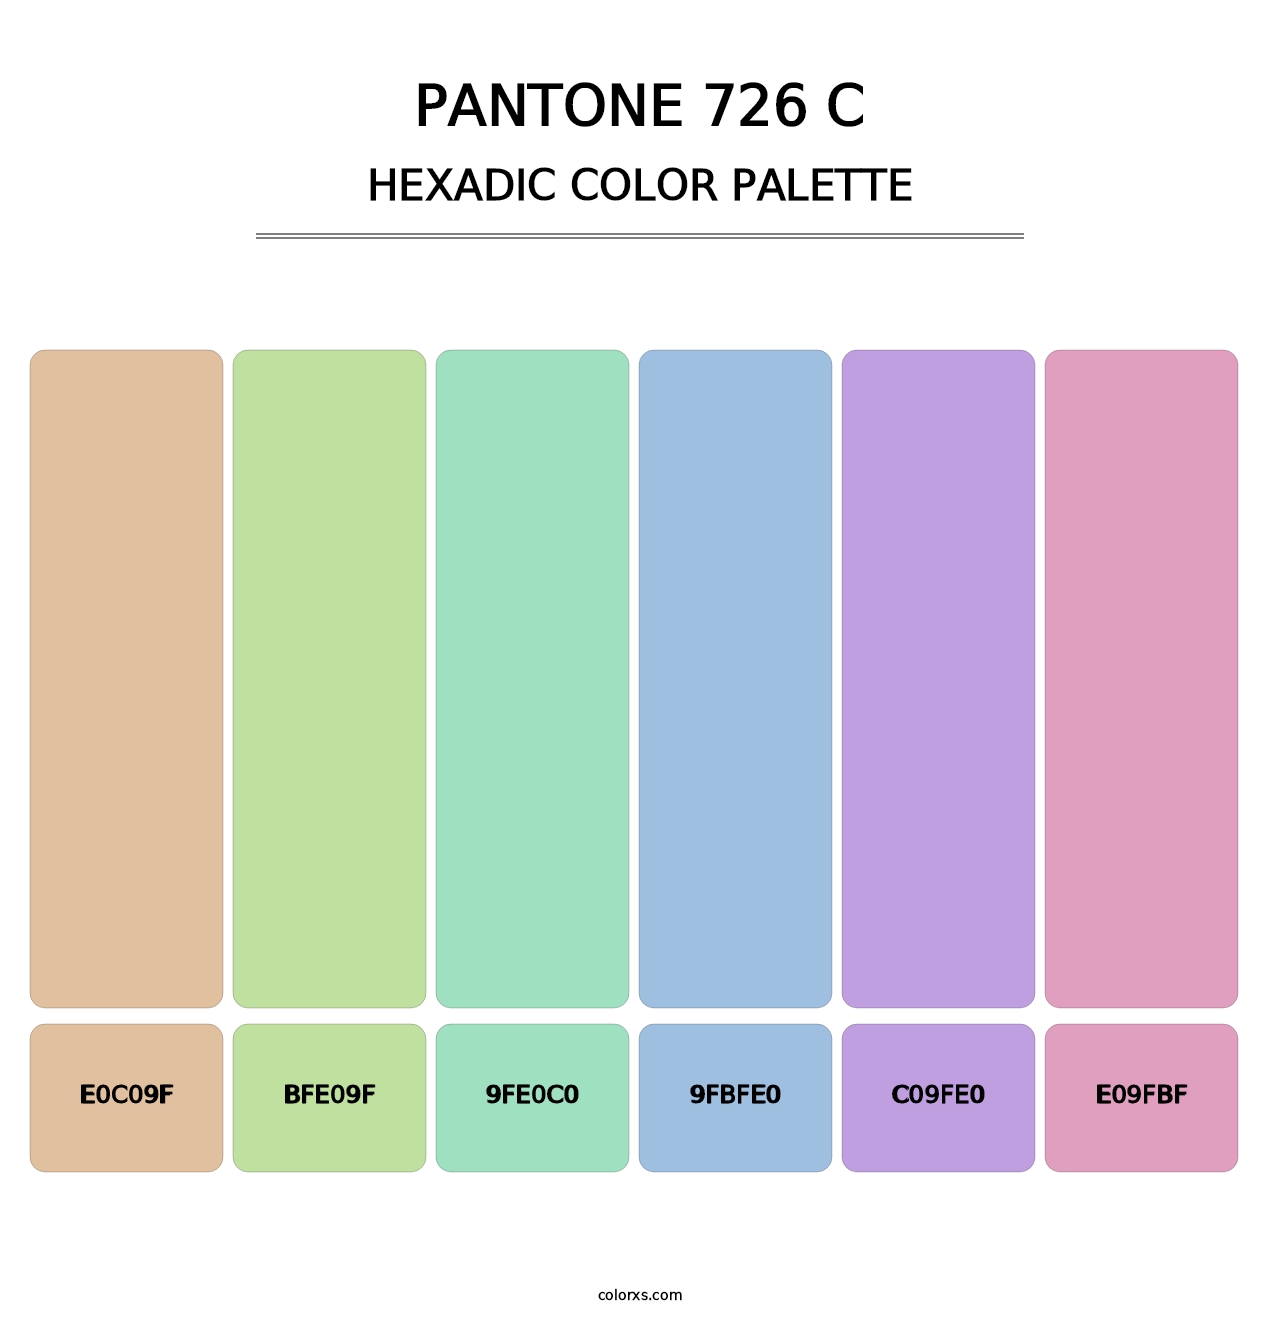 PANTONE 726 C - Hexadic Color Palette